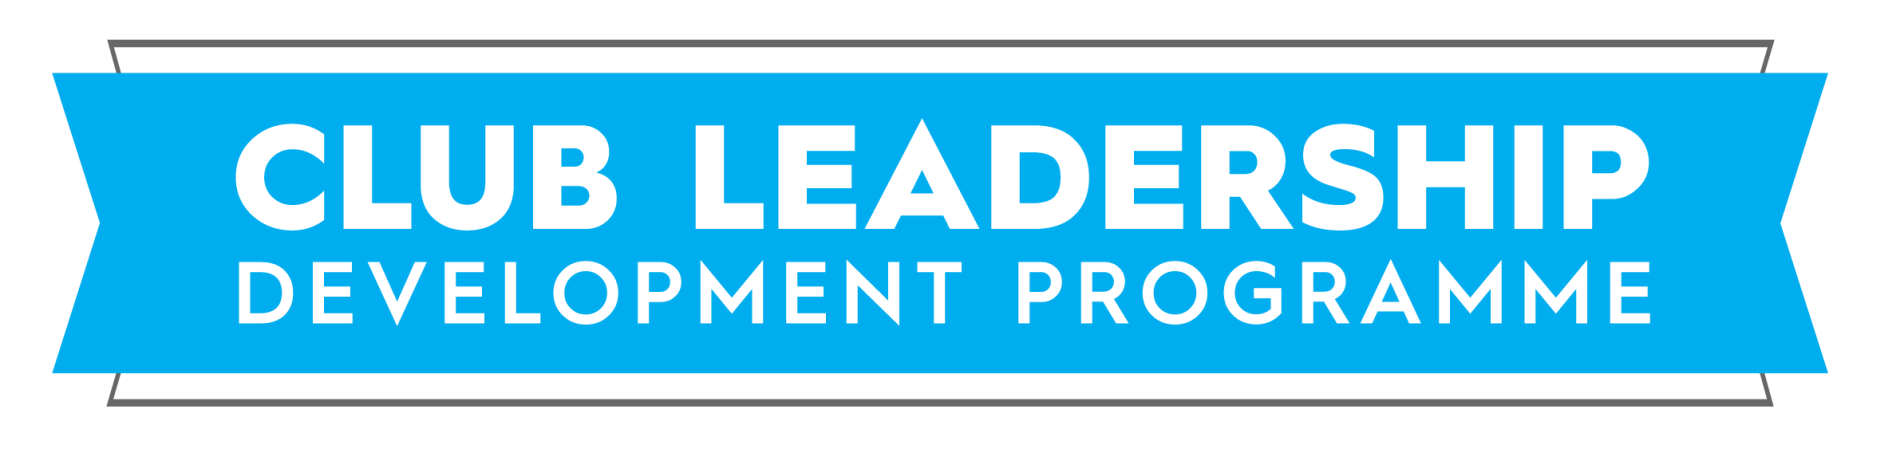 GAA Club Leadership Development Programme - Dublin (002)